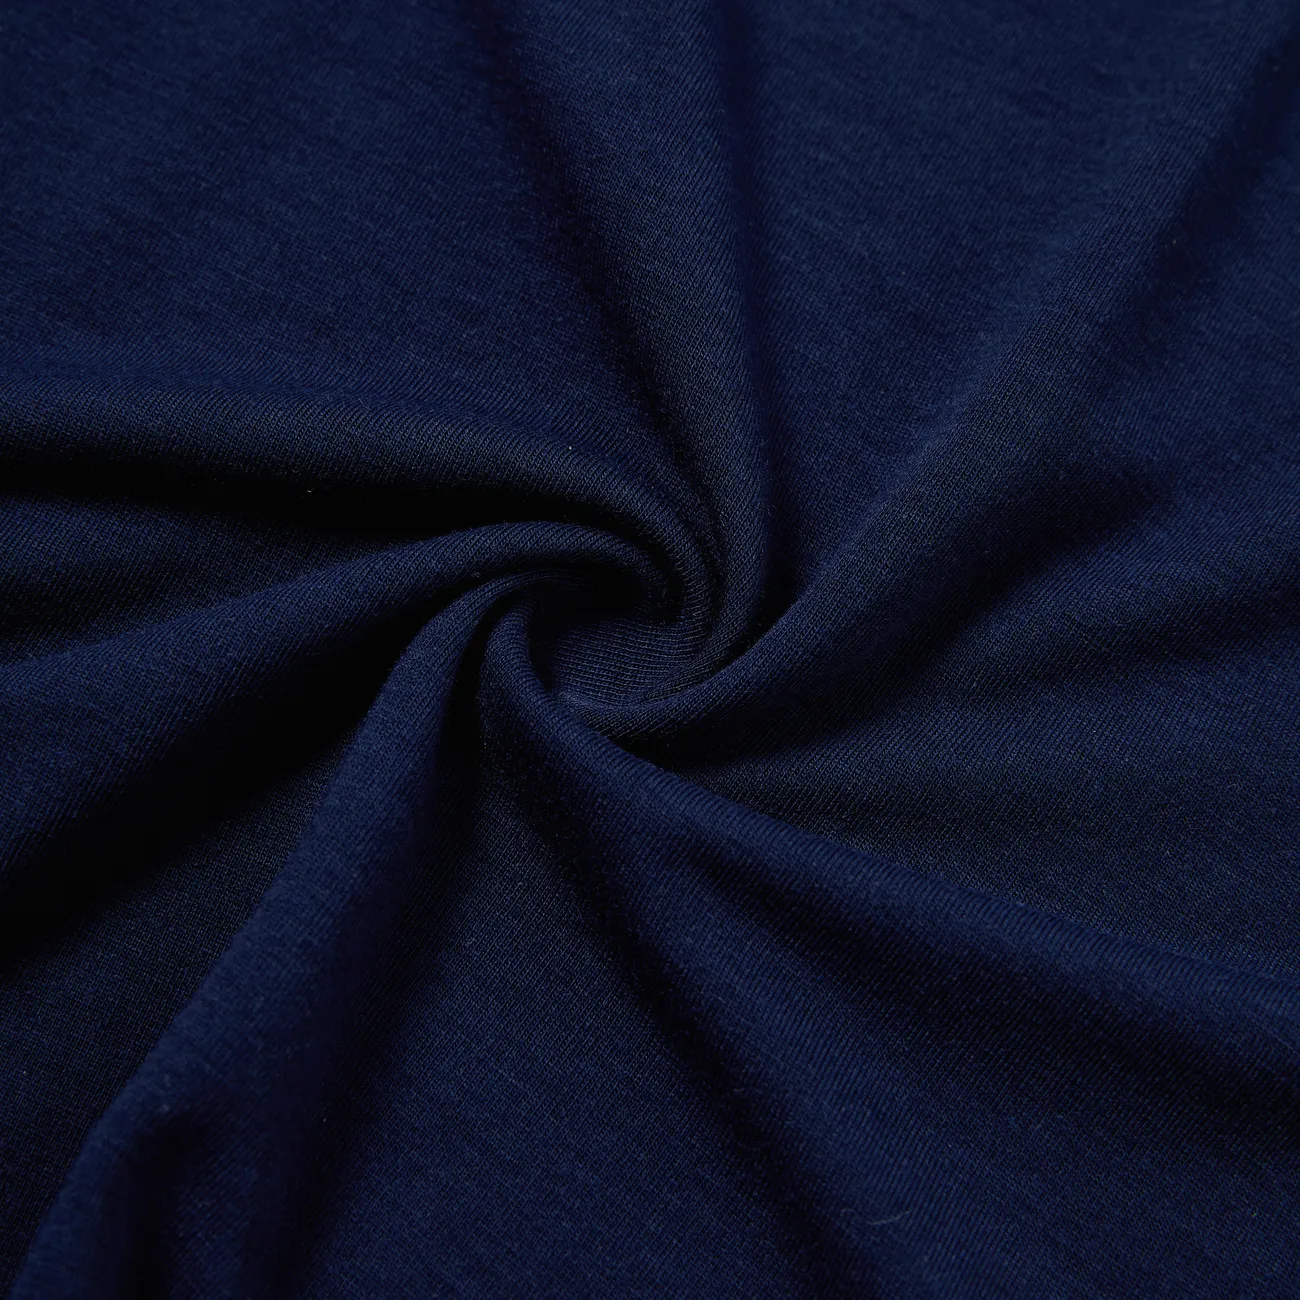 Familien-Looks Kurzärmelig Familien-Outfits Pyjamas (Flame Resistant) Blau Schwarz big image 1